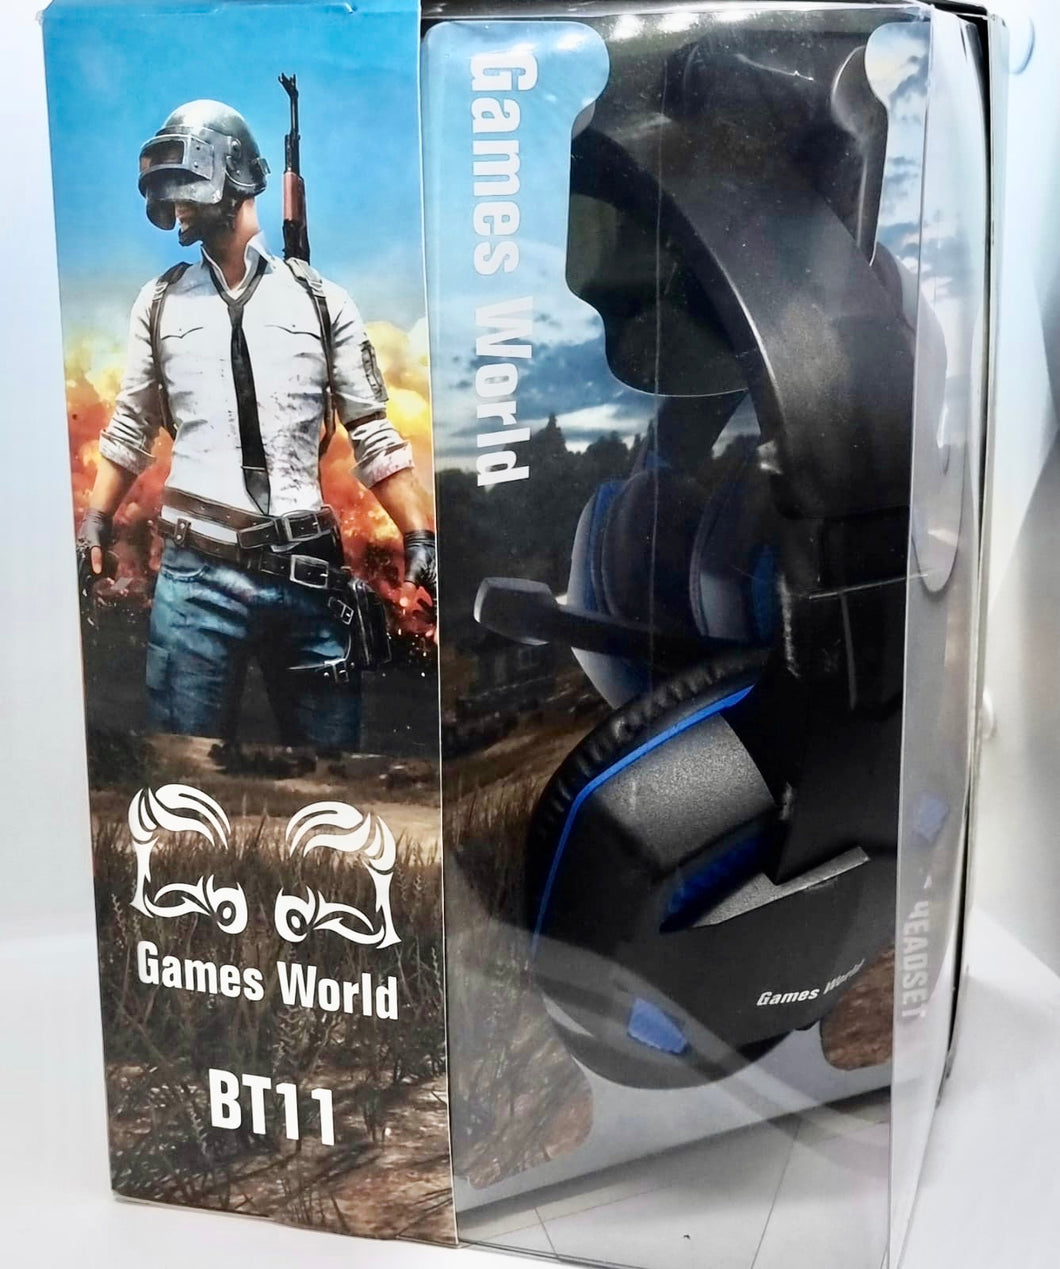 BT11 Gaming headset